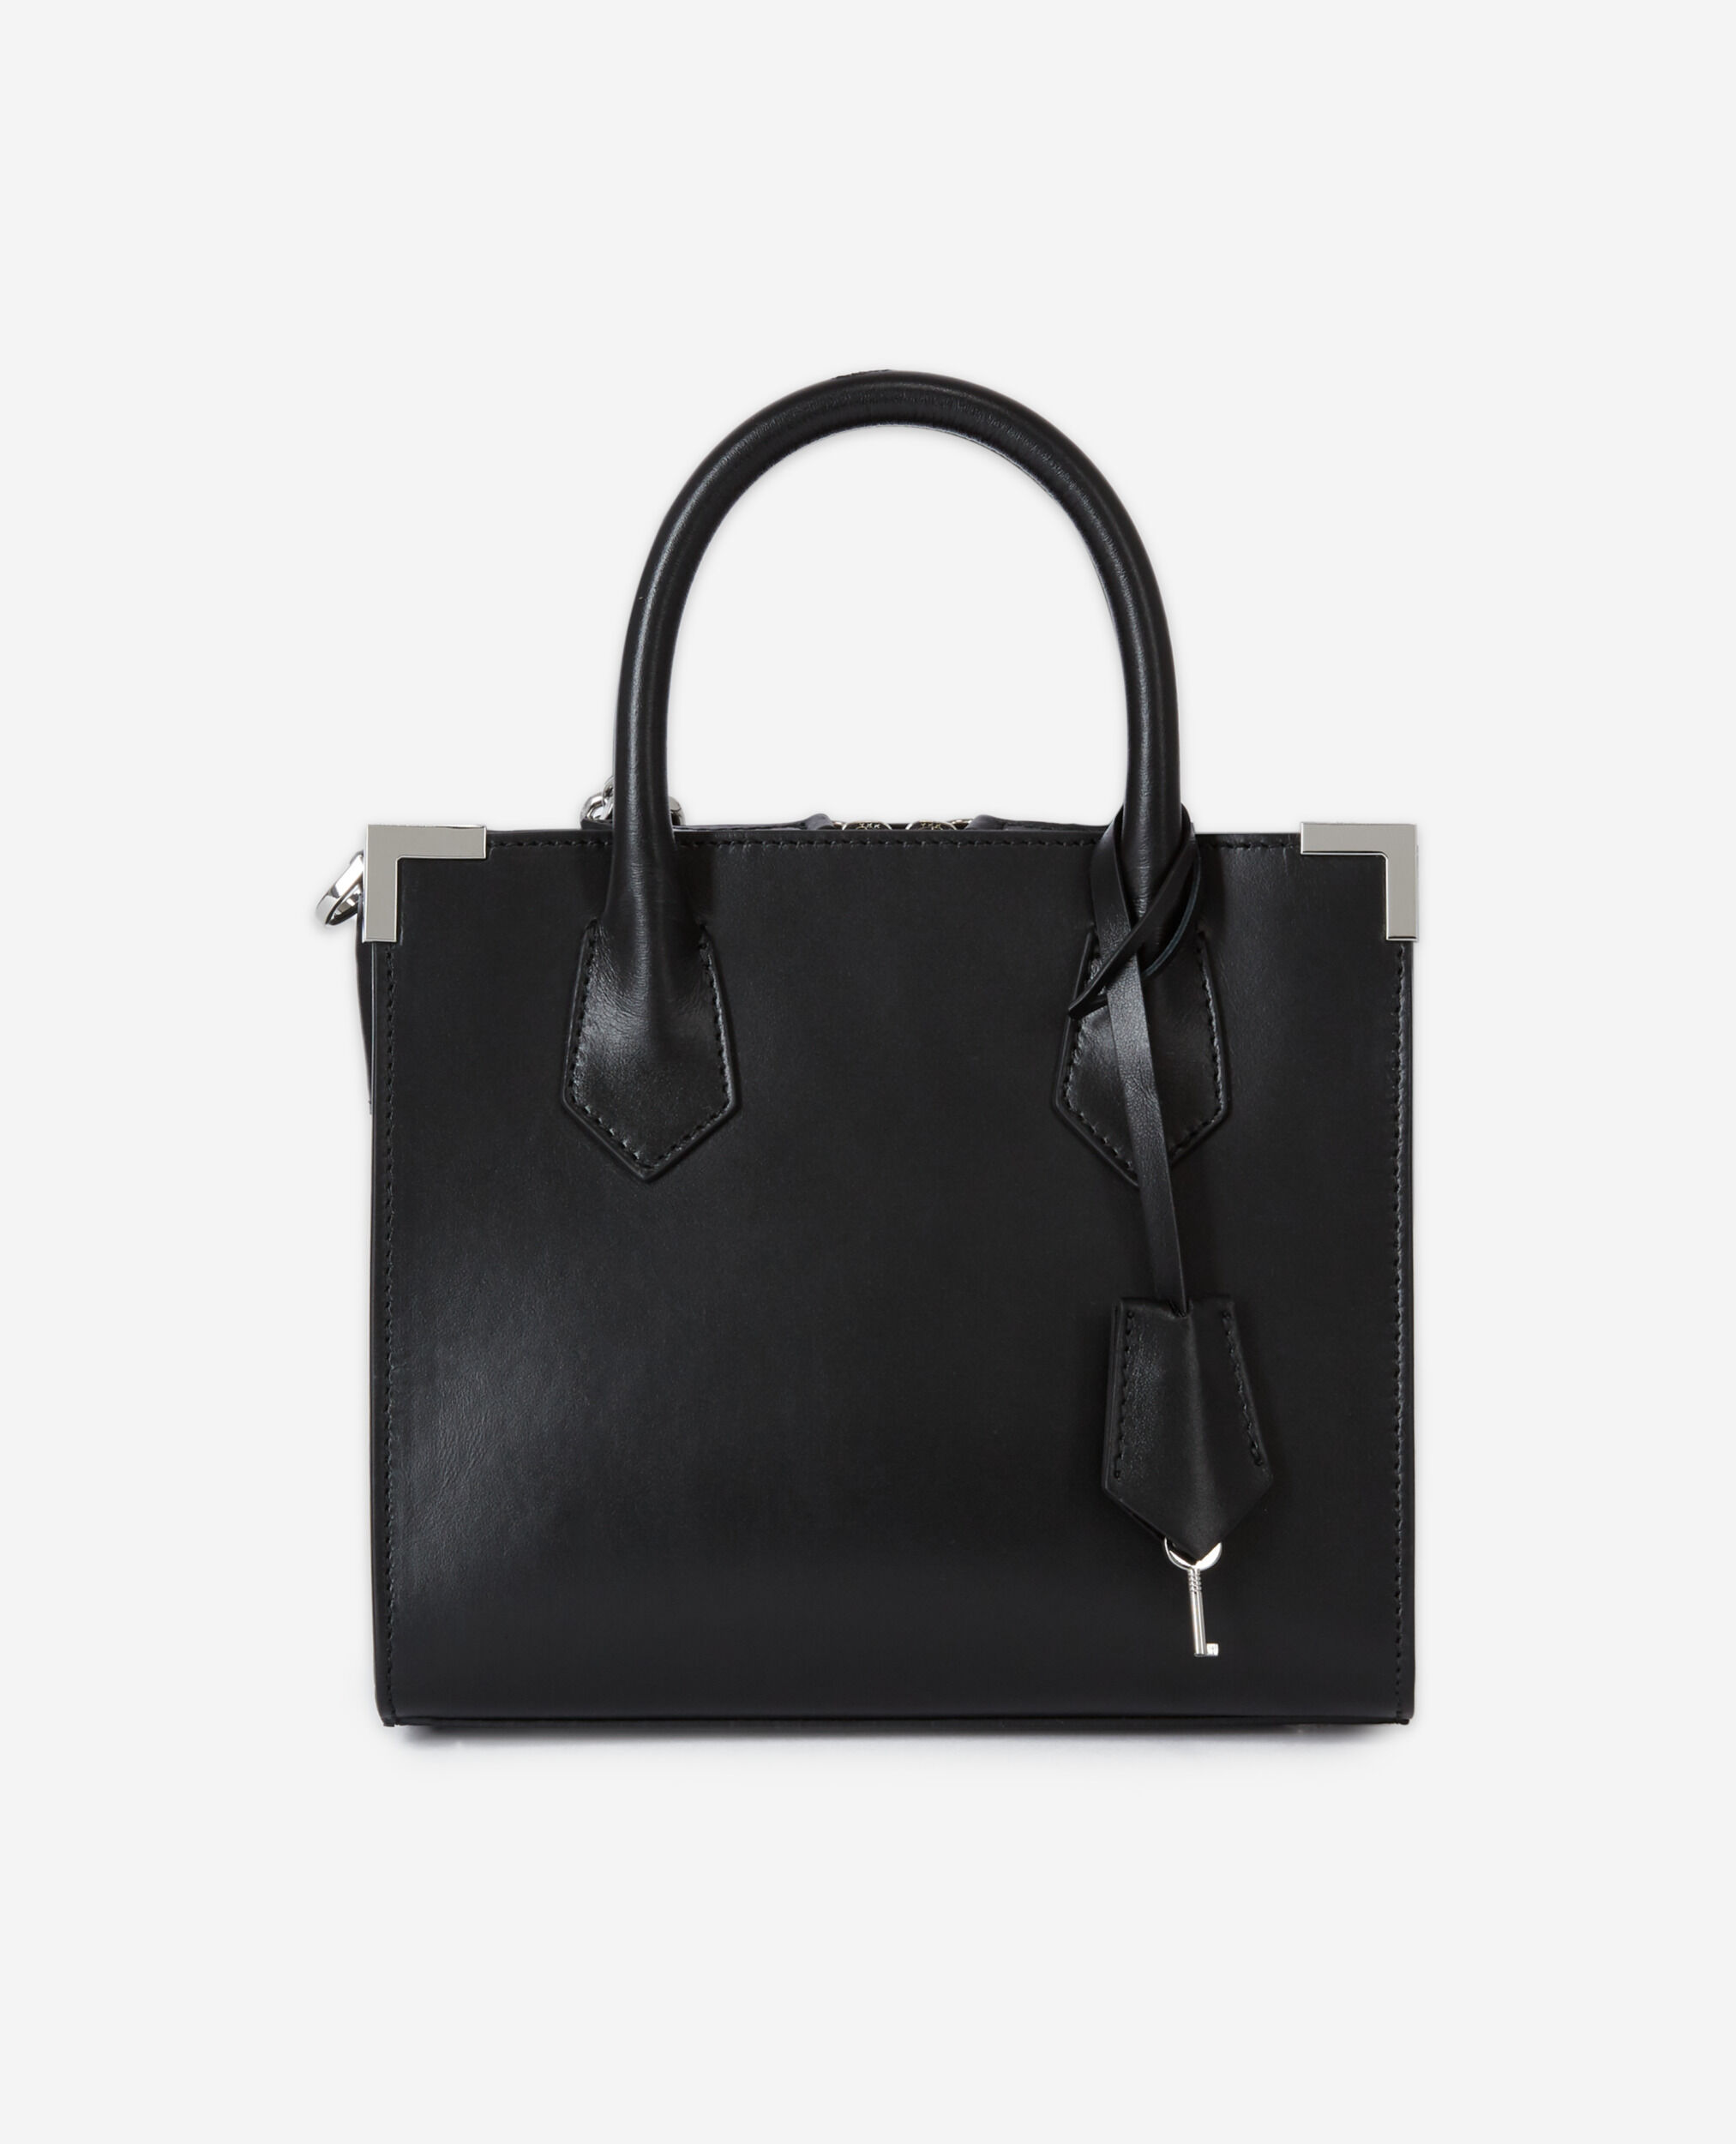 Medium Ming bag in smooth black leather, BLACK, hi-res image number null